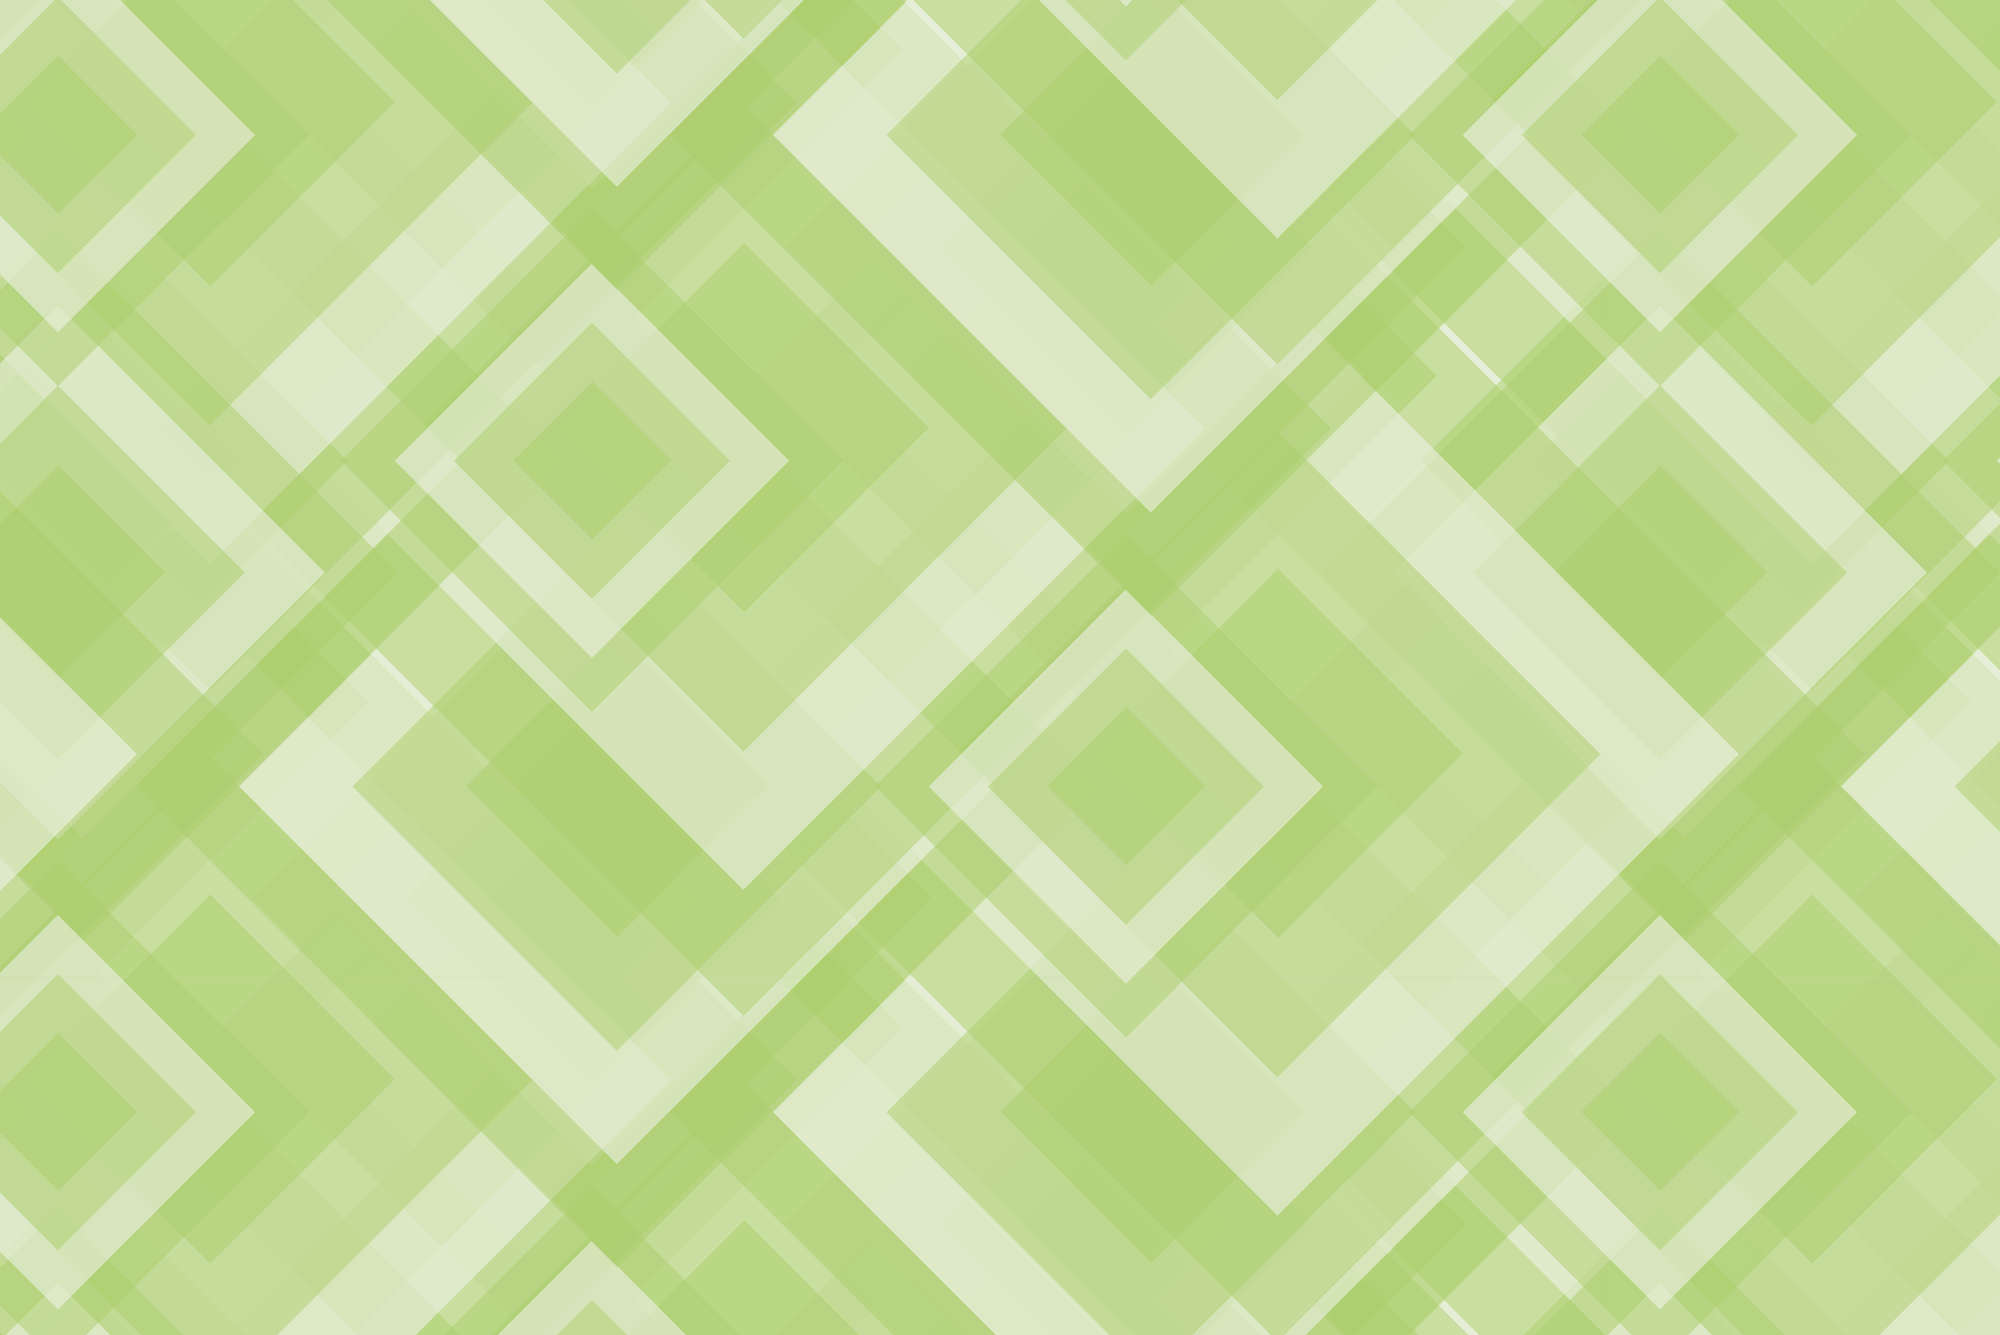             Designbehang overlappende vierkanten groen op mat glad vlies
        